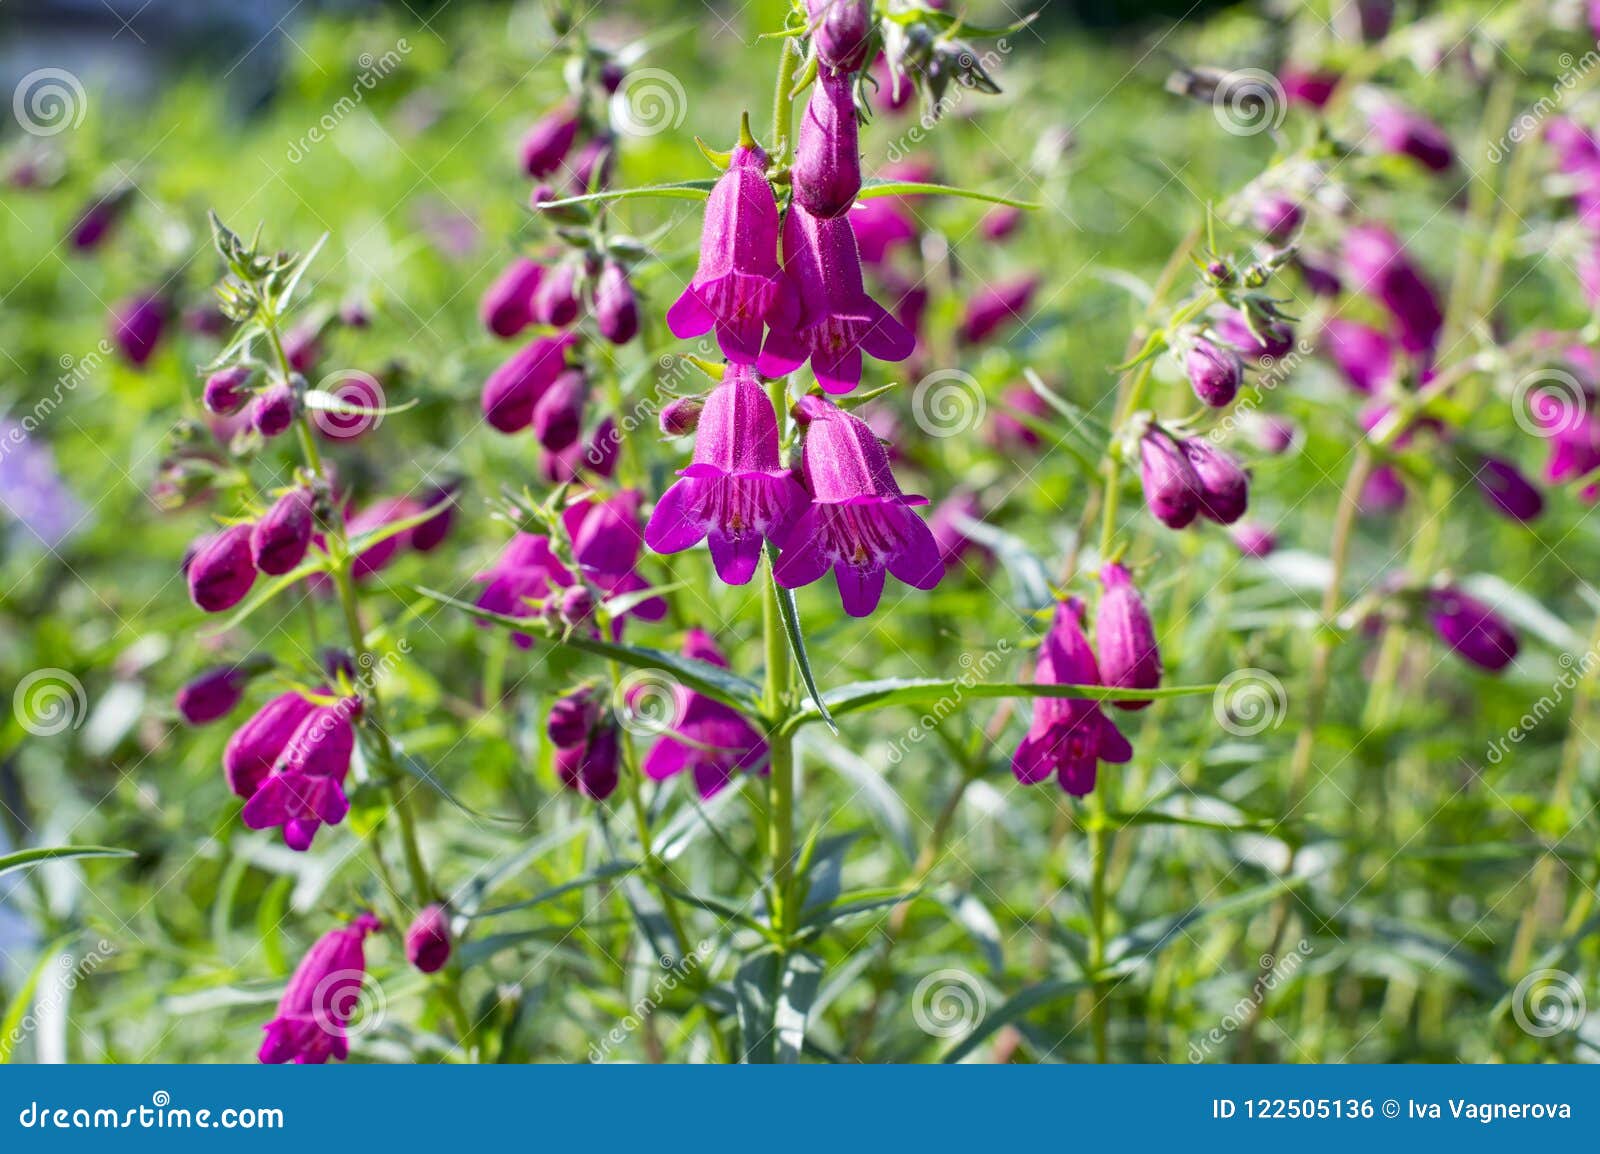 penstemon mexicali cultivar red rocks flowers, purple ornamental bell flowering small plant